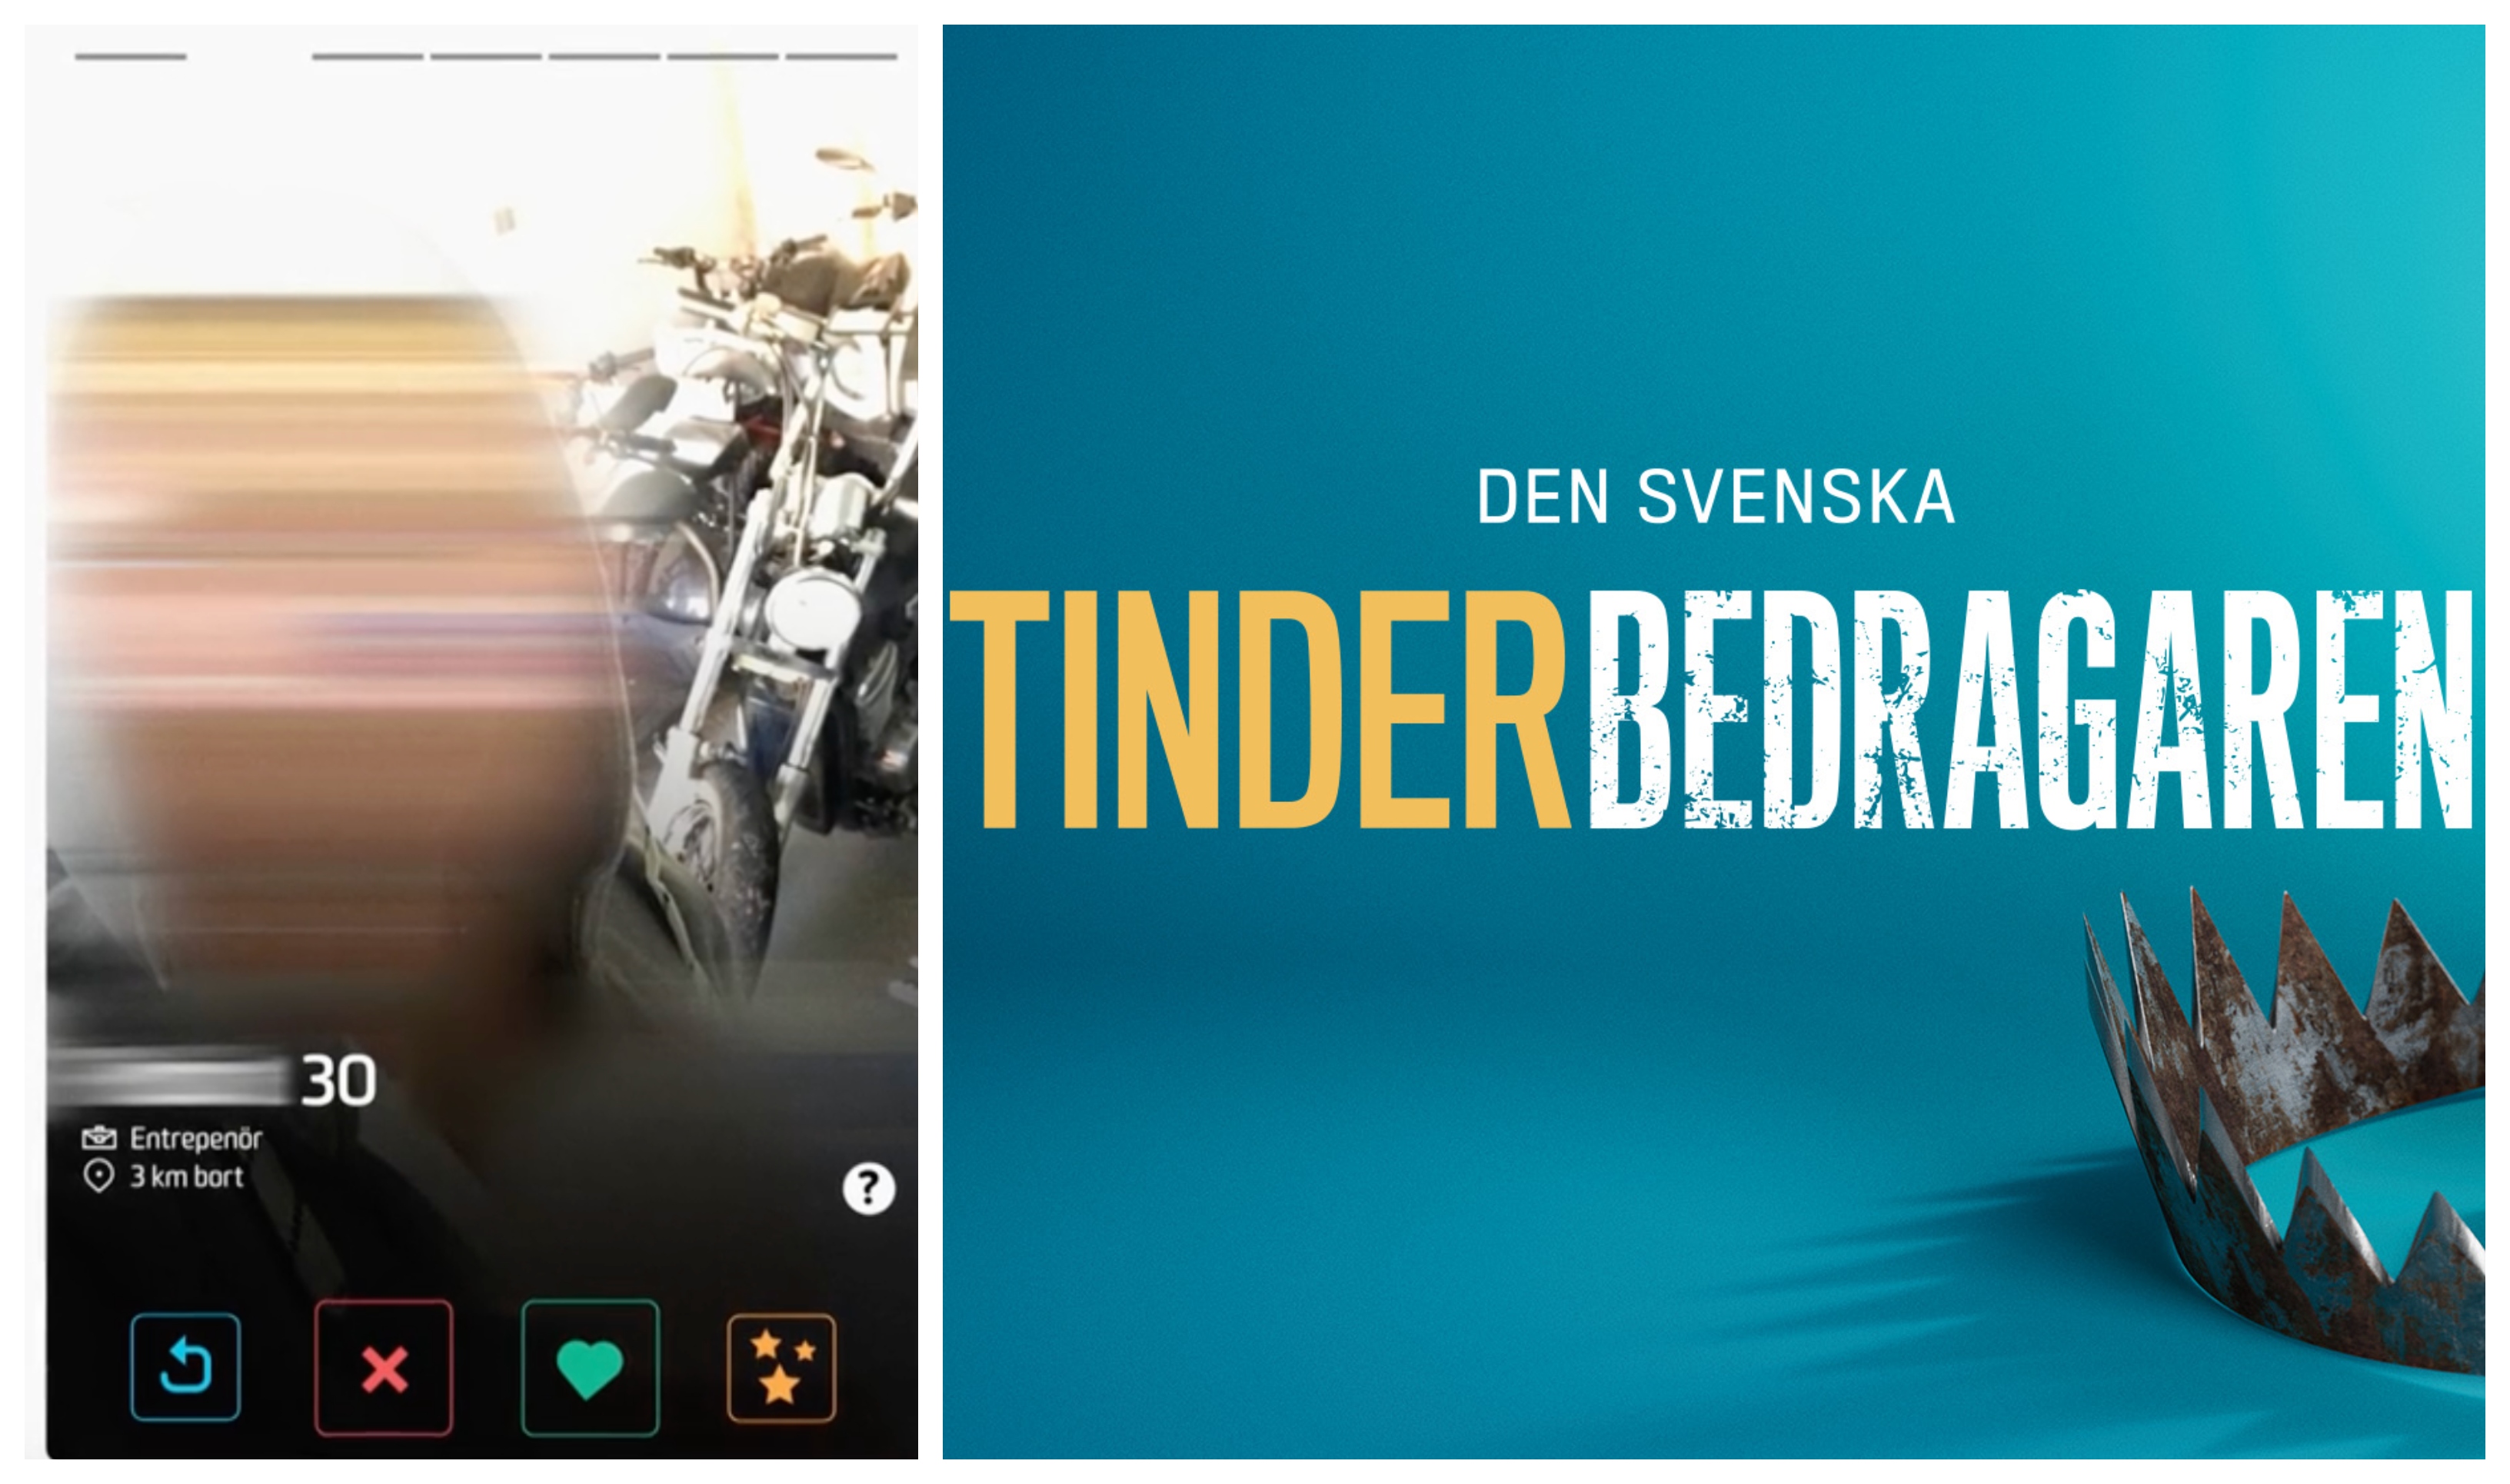 Bedrägerier, Tinder, TV4